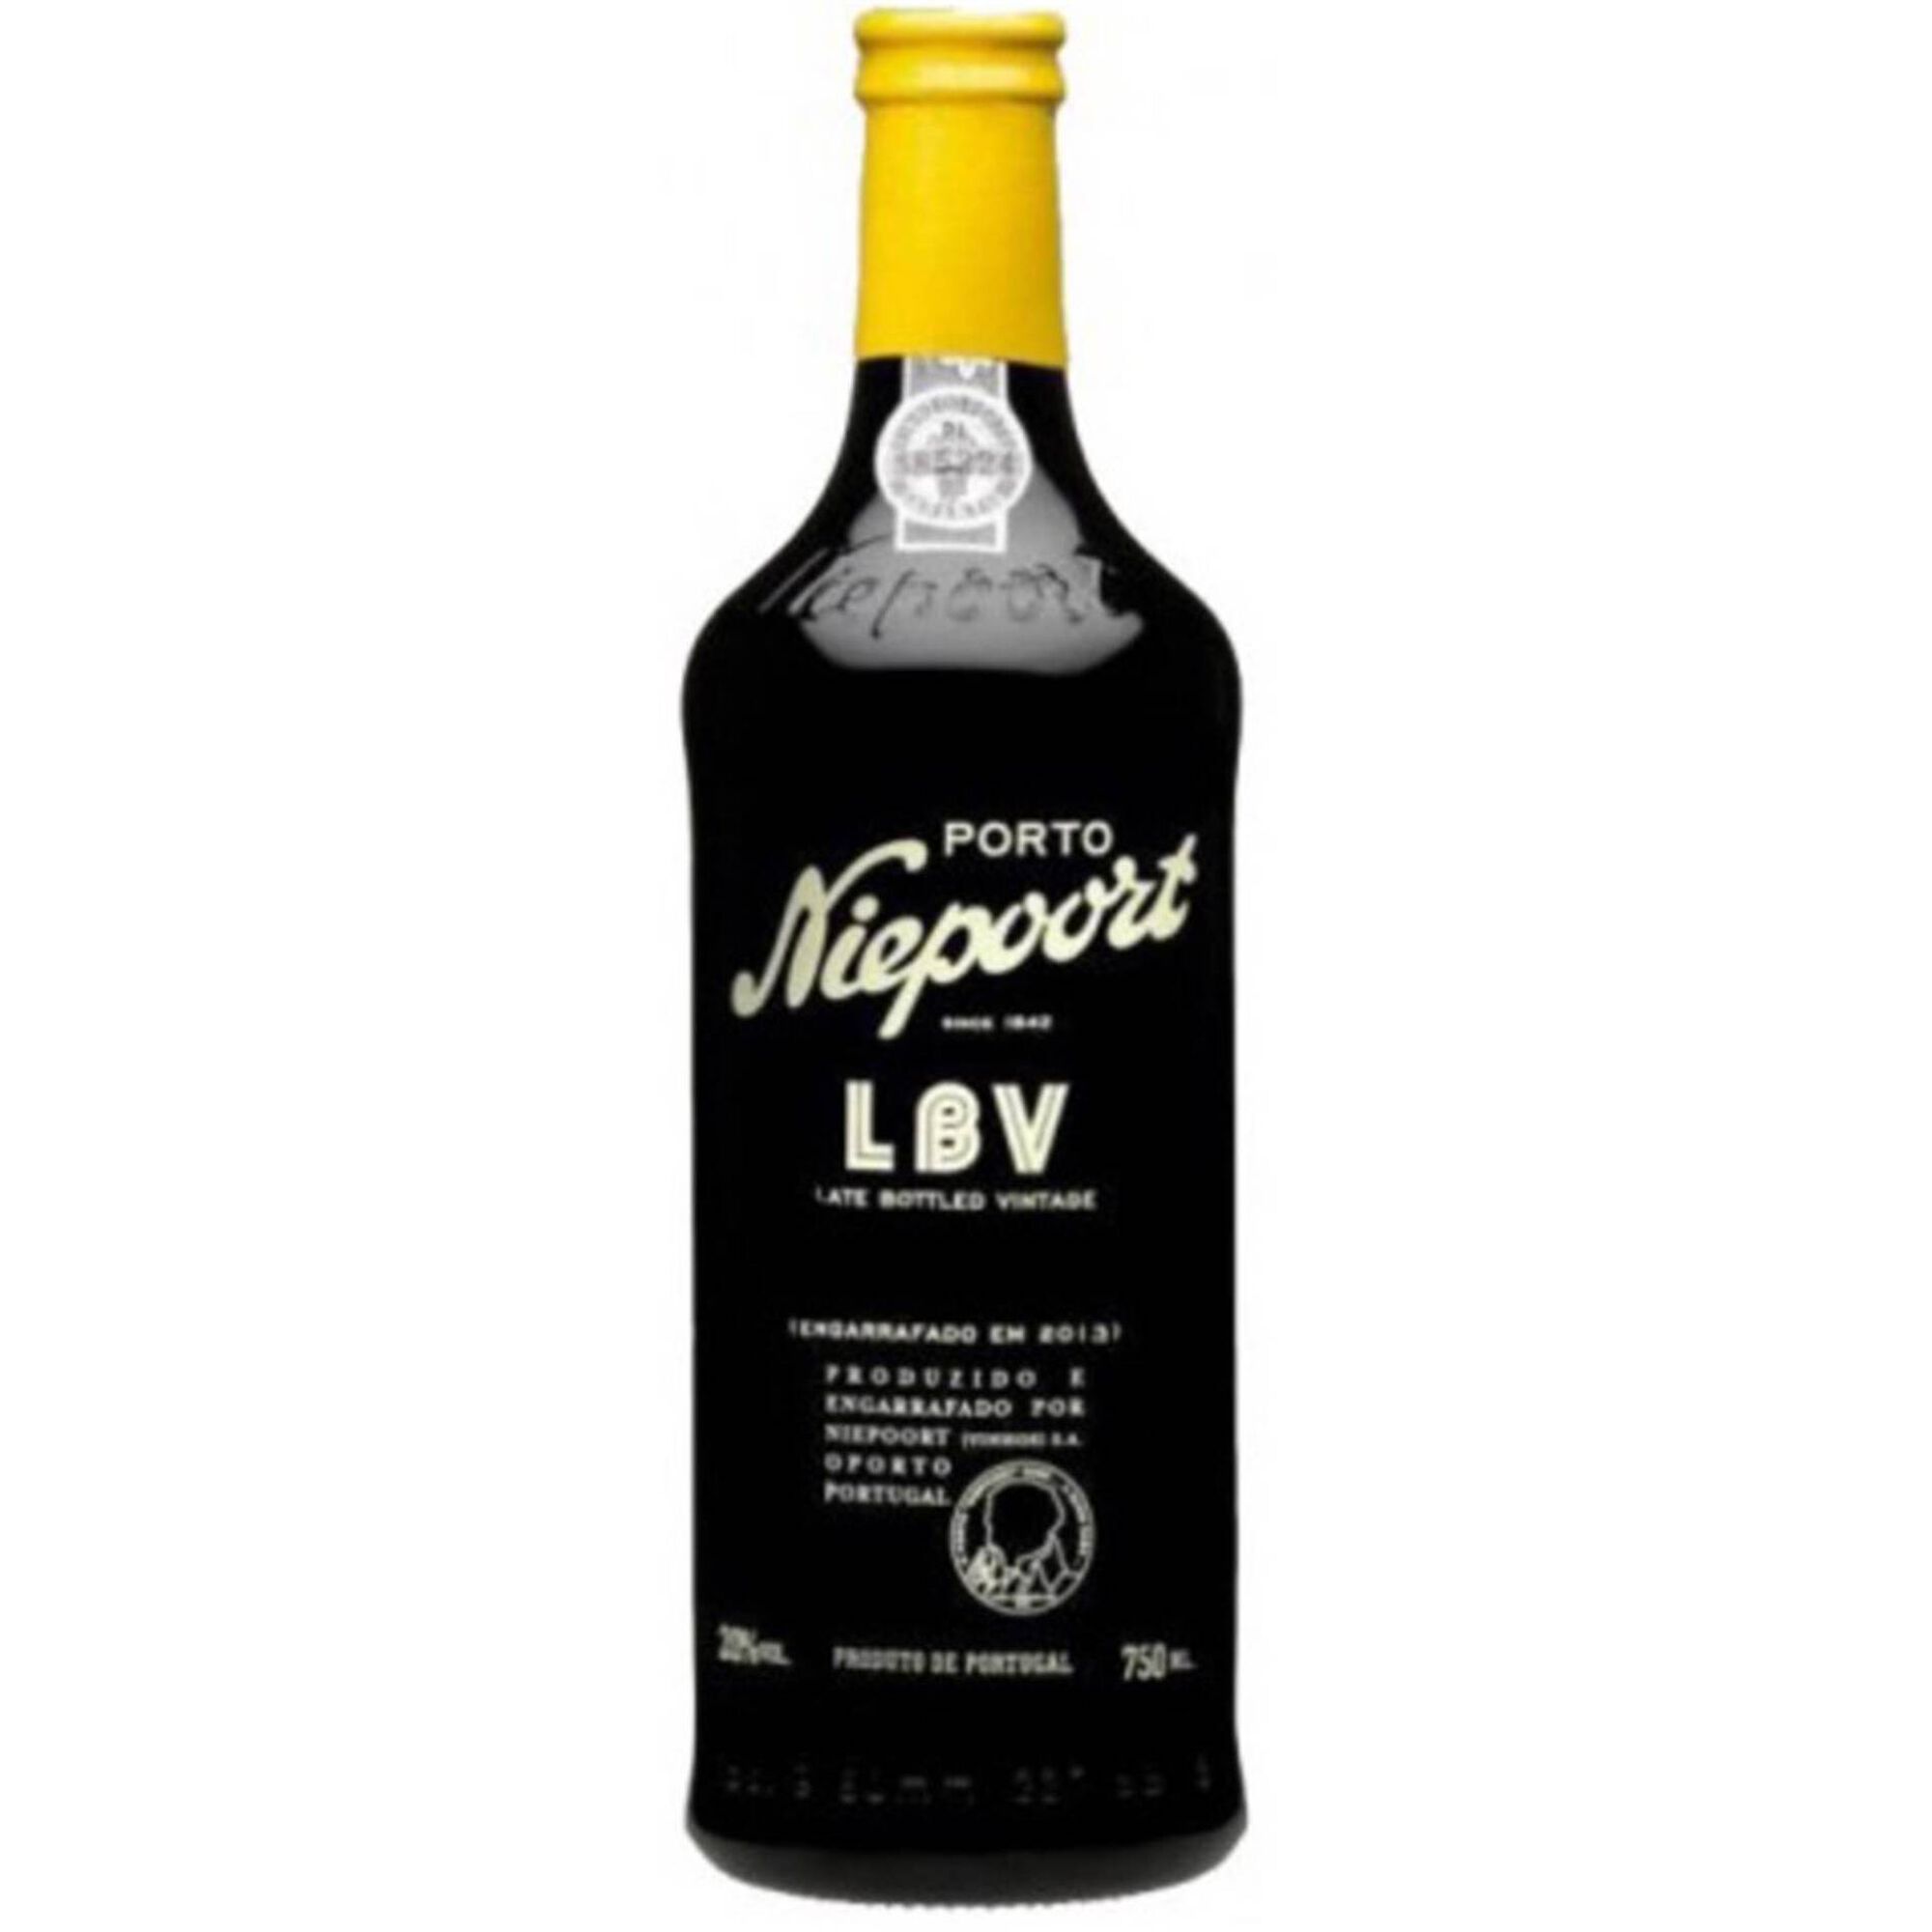 Niepoort Vinho do Porto Late Bottled Vintage